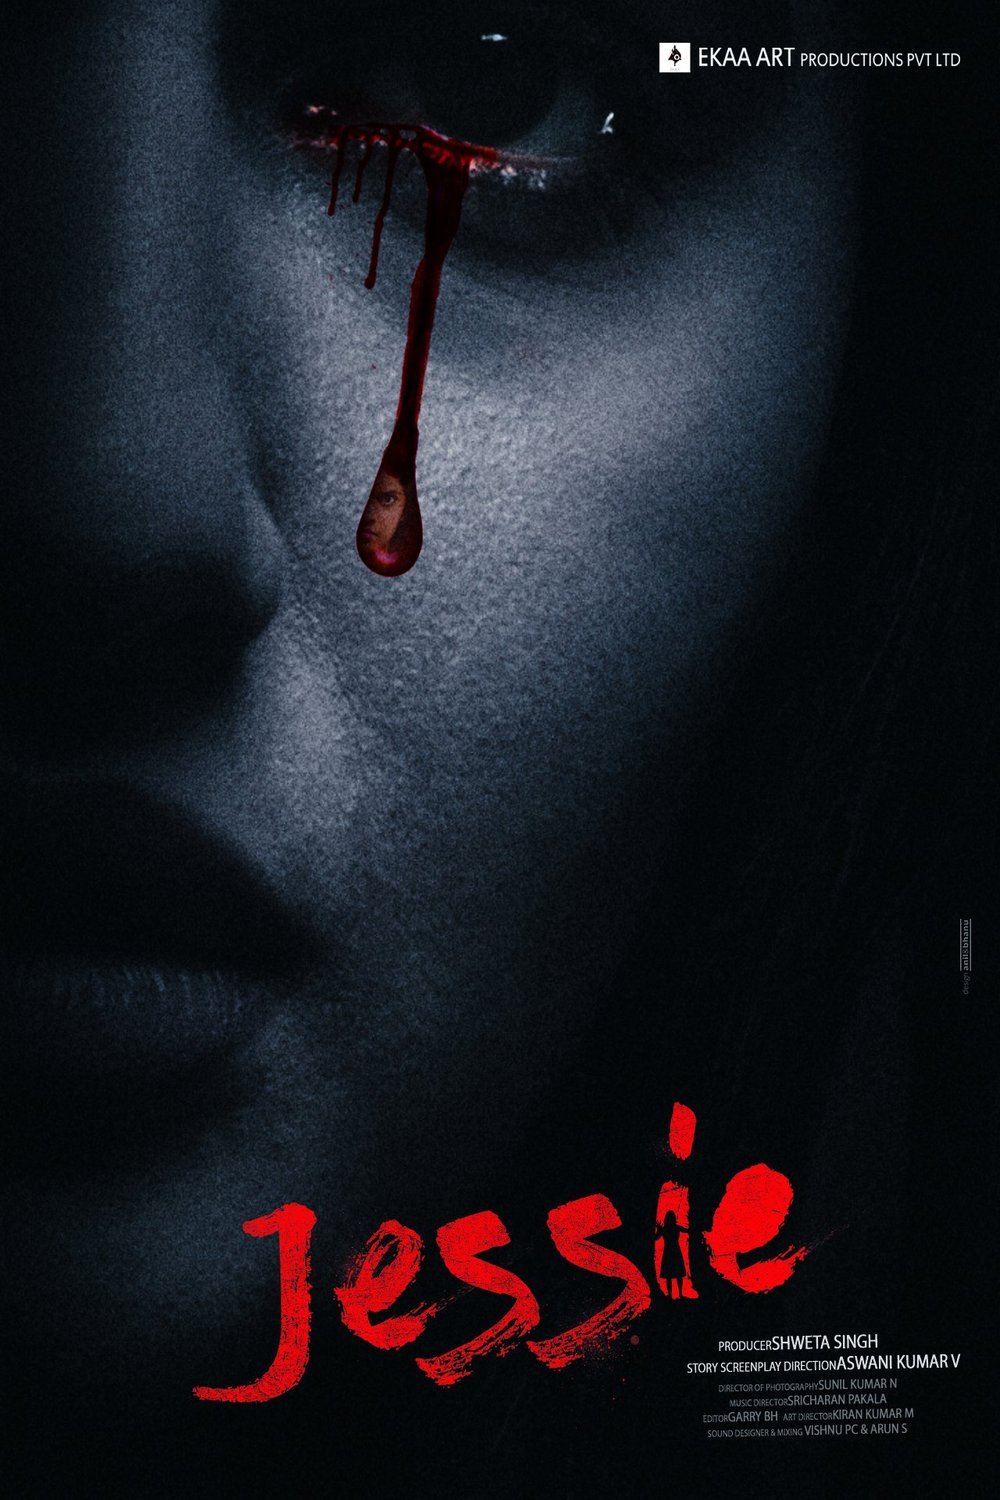 Telugu poster of the movie Jessie